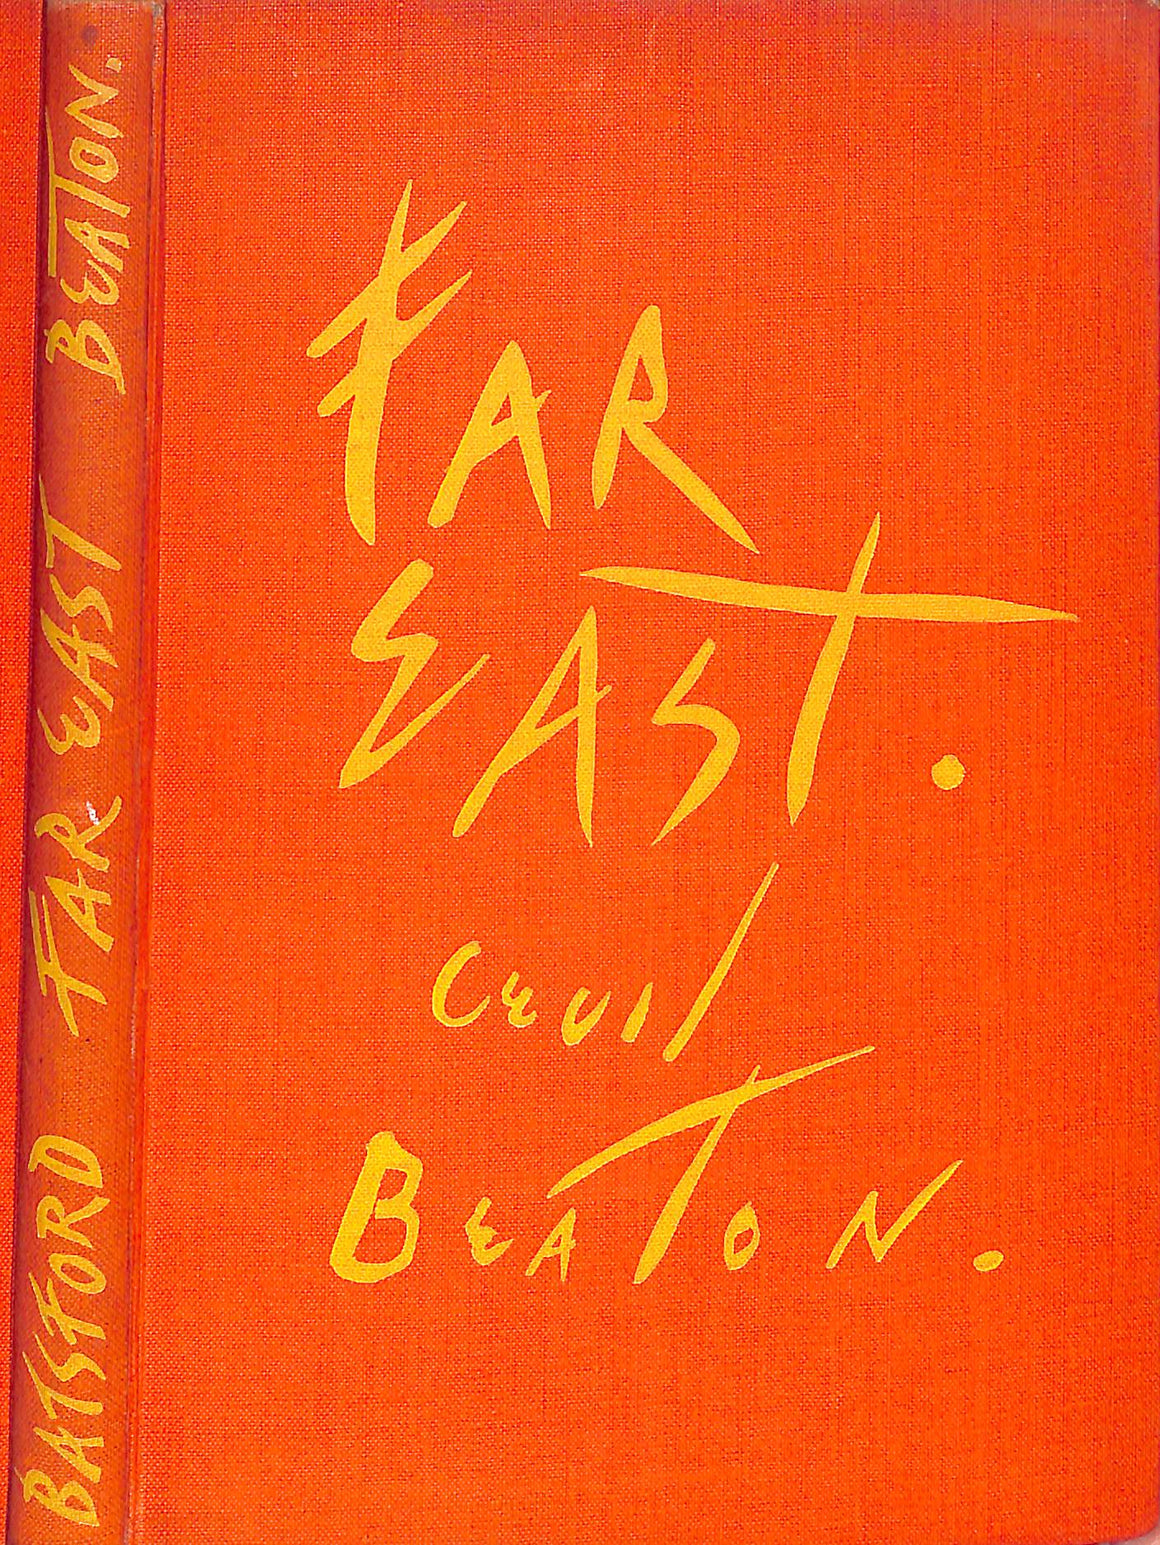 "Far East" 1945 BEATON, Cecil (INSCRIBED)